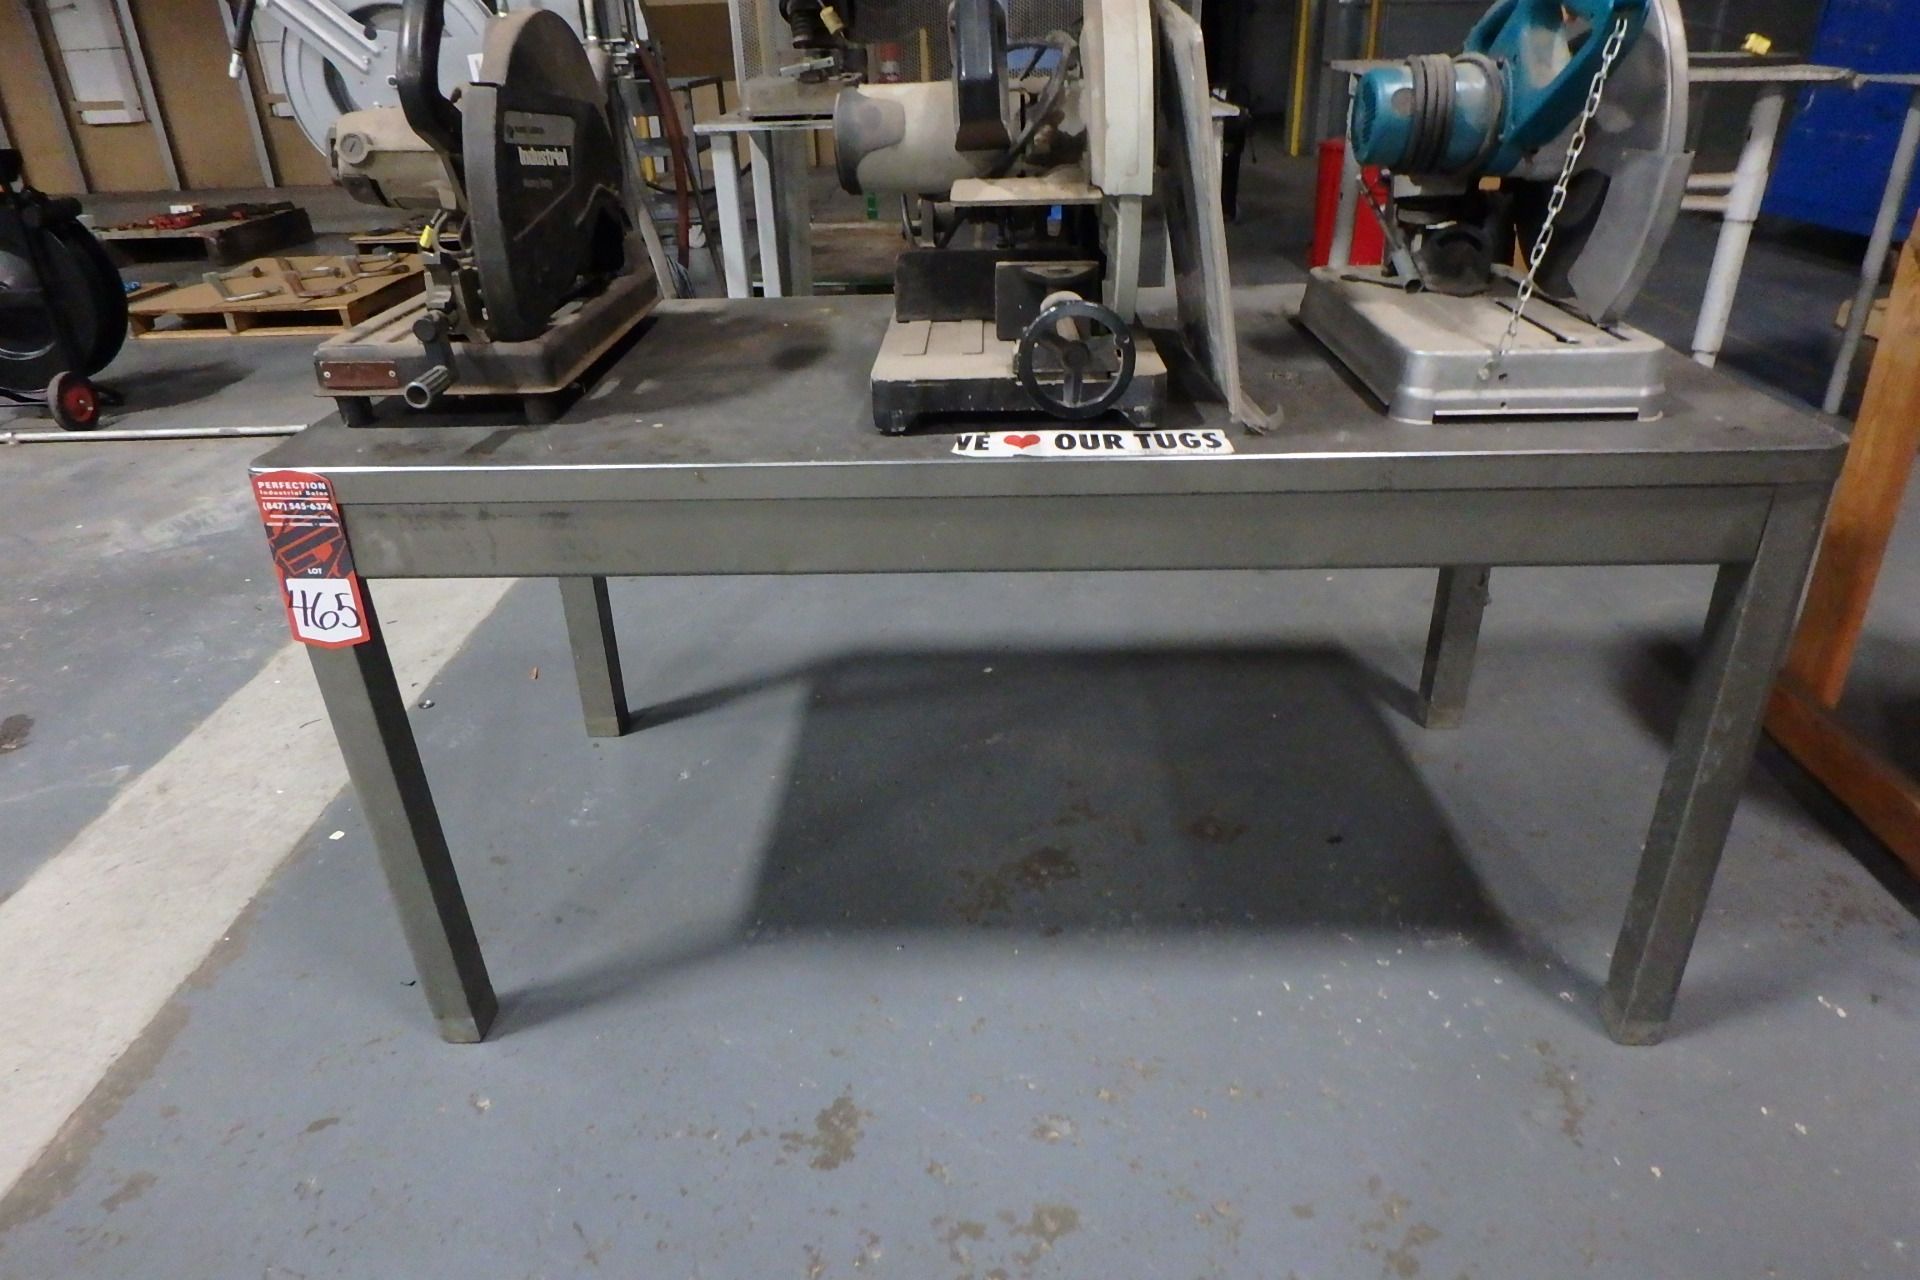 Lot Comprising (1) Metal Work Table, (1) Metal Work Bench w/ Wood Top